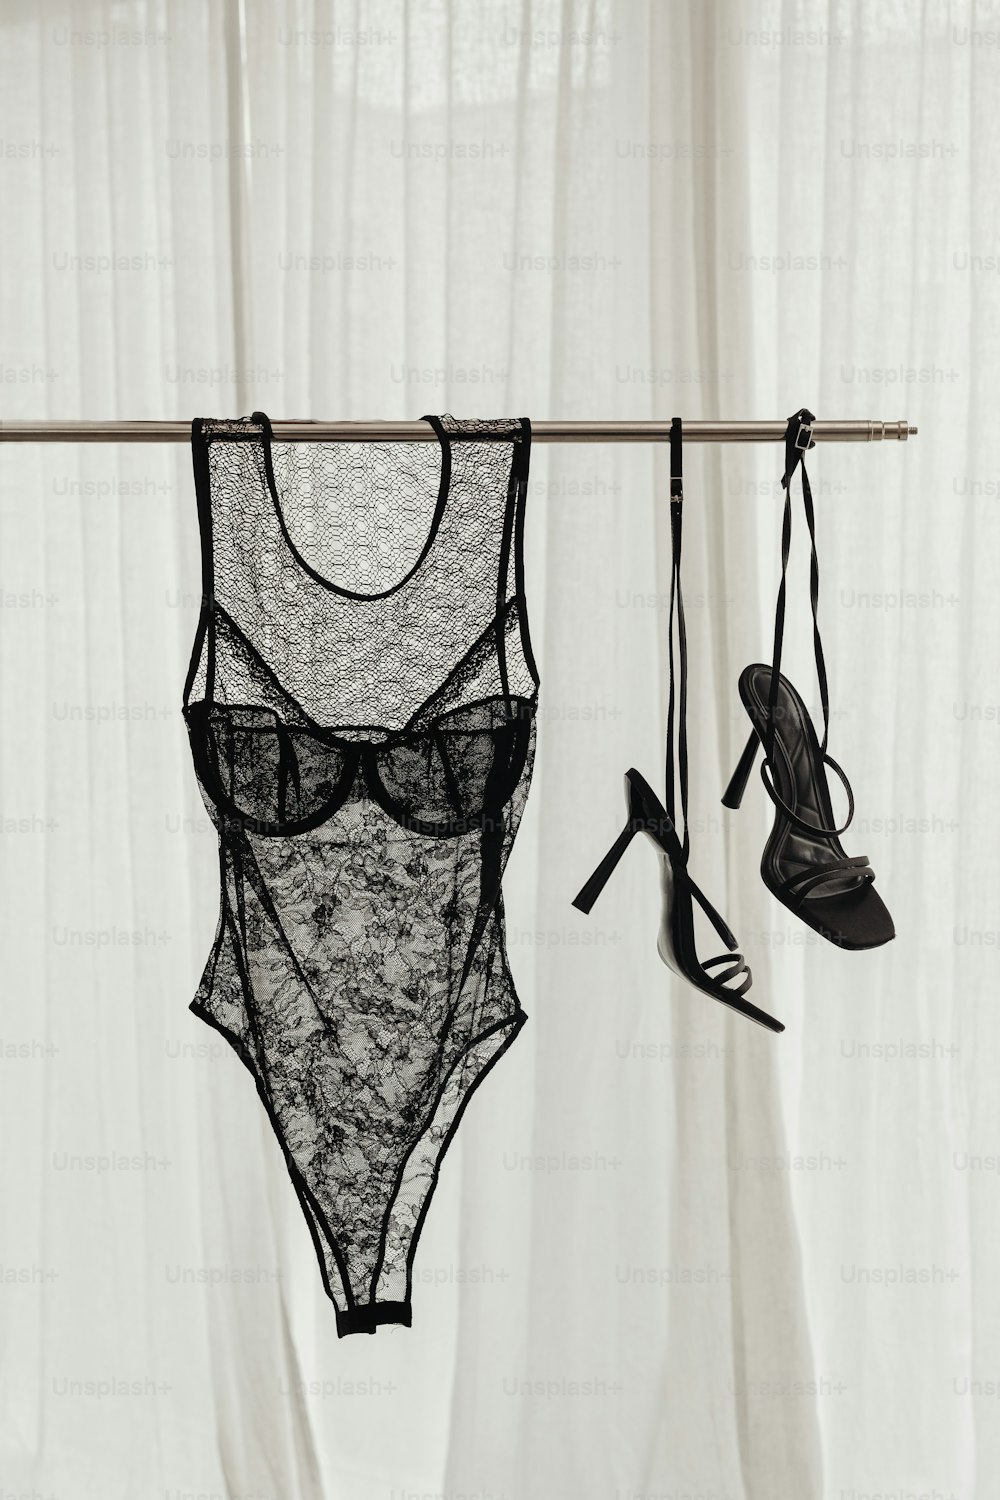 Hanging bra on clothesline photo Stock Photos - Page 1 : Masterfile